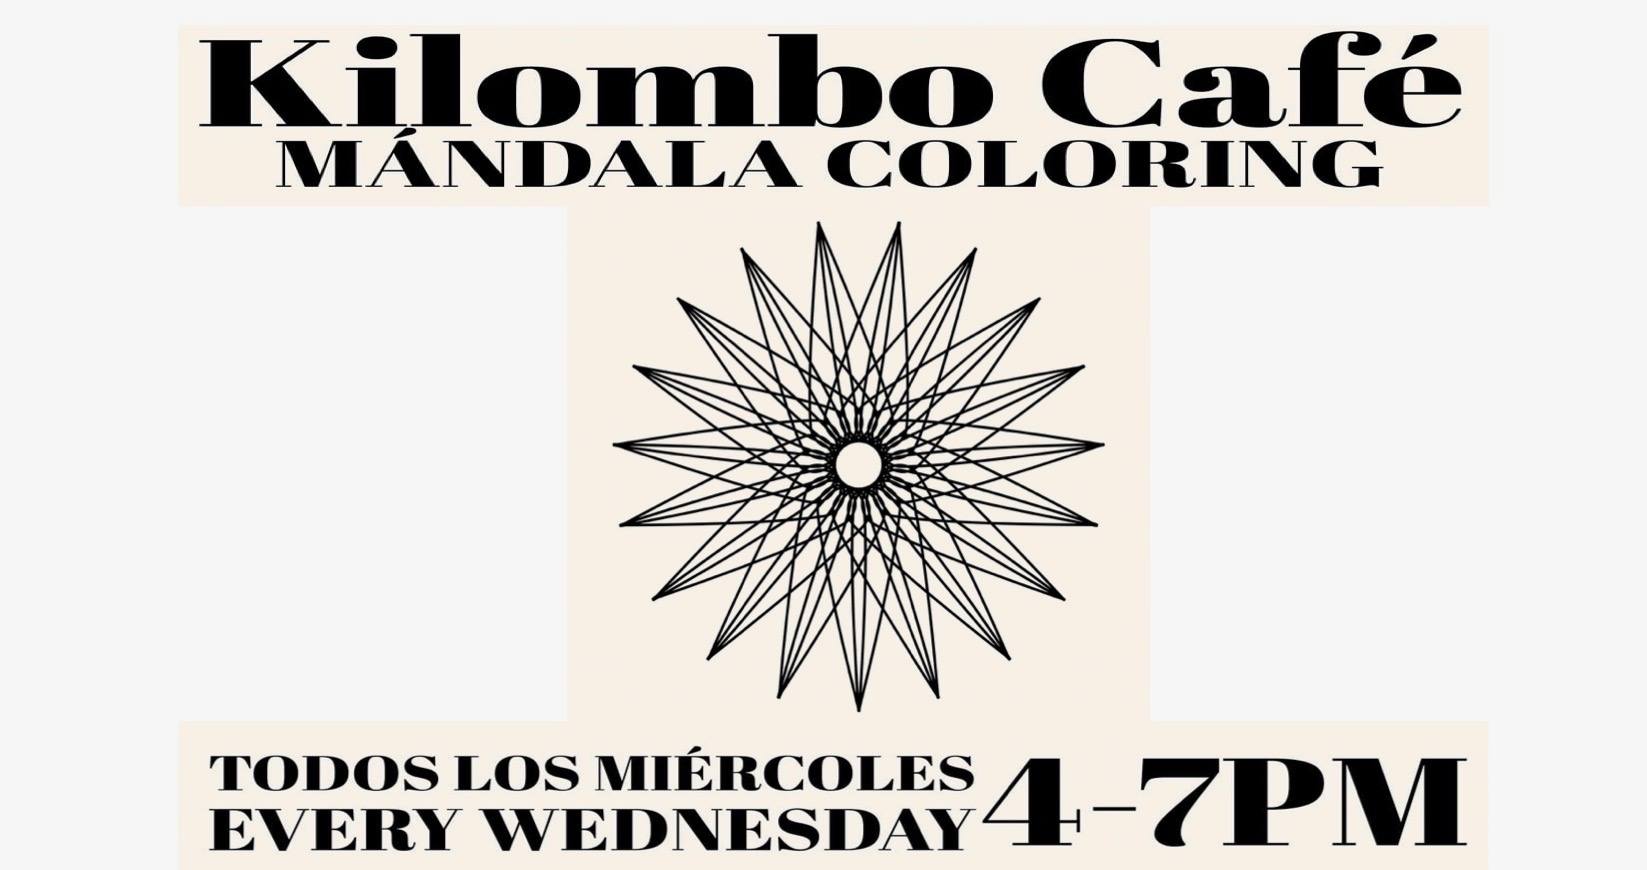 Mandala Coloring at Kilombo Cafe @ Kilombo Cafe